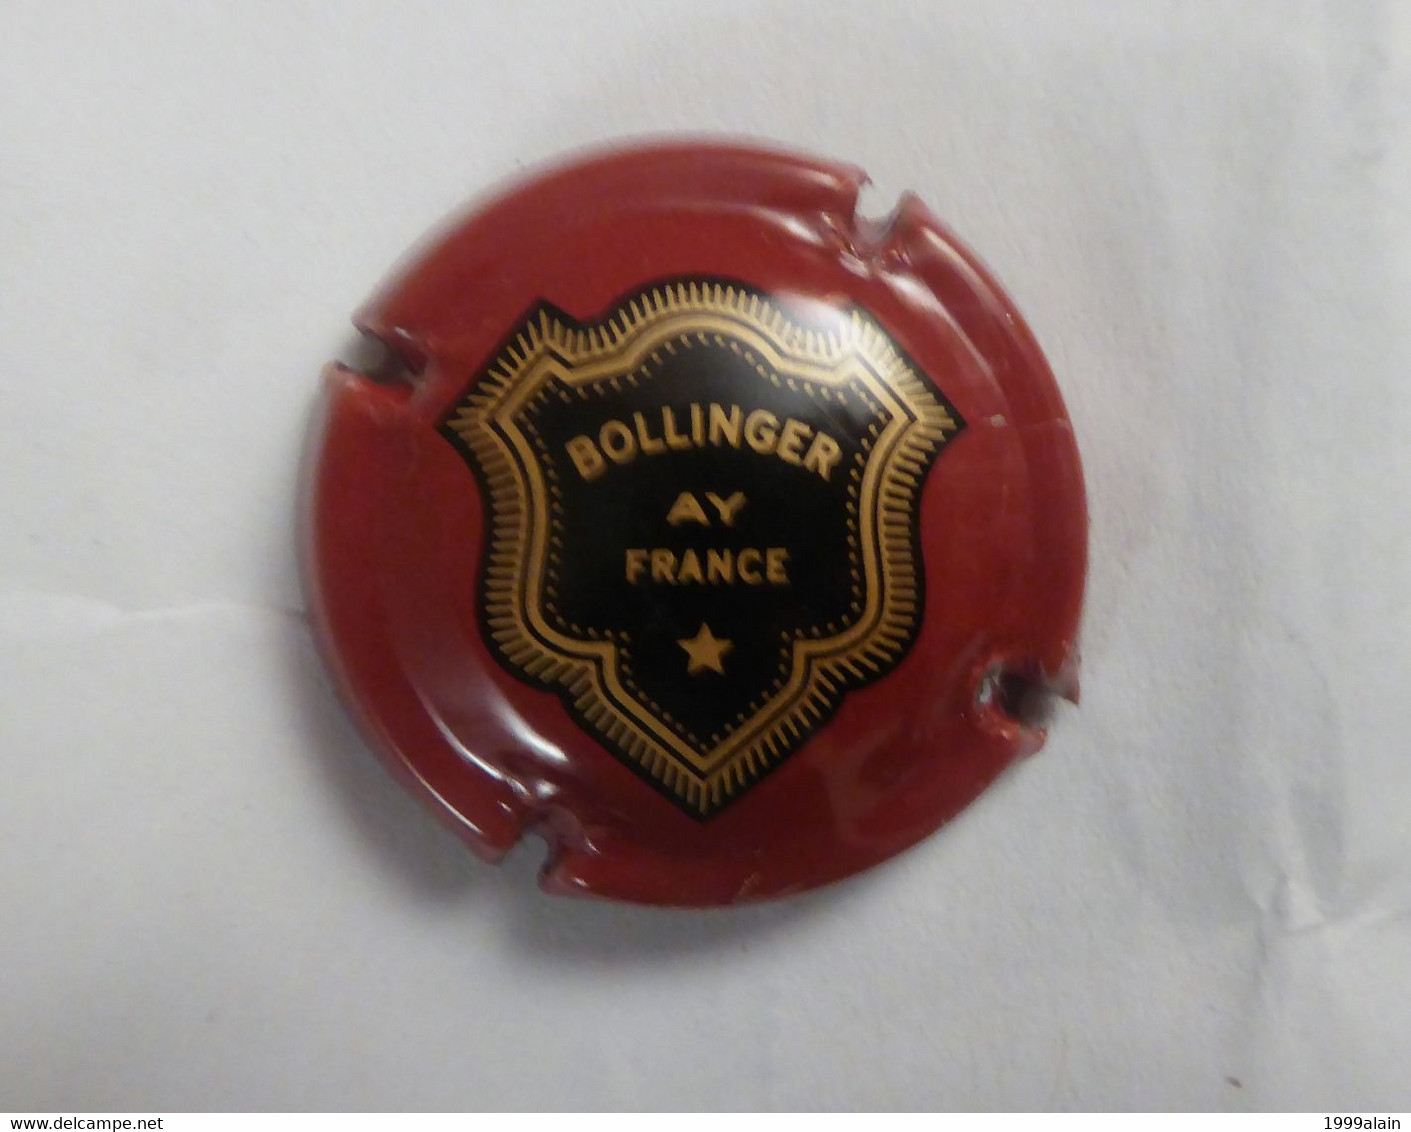 CAPSULE CHAMPAGNE BOLLINGER N° 35 - Bollinger